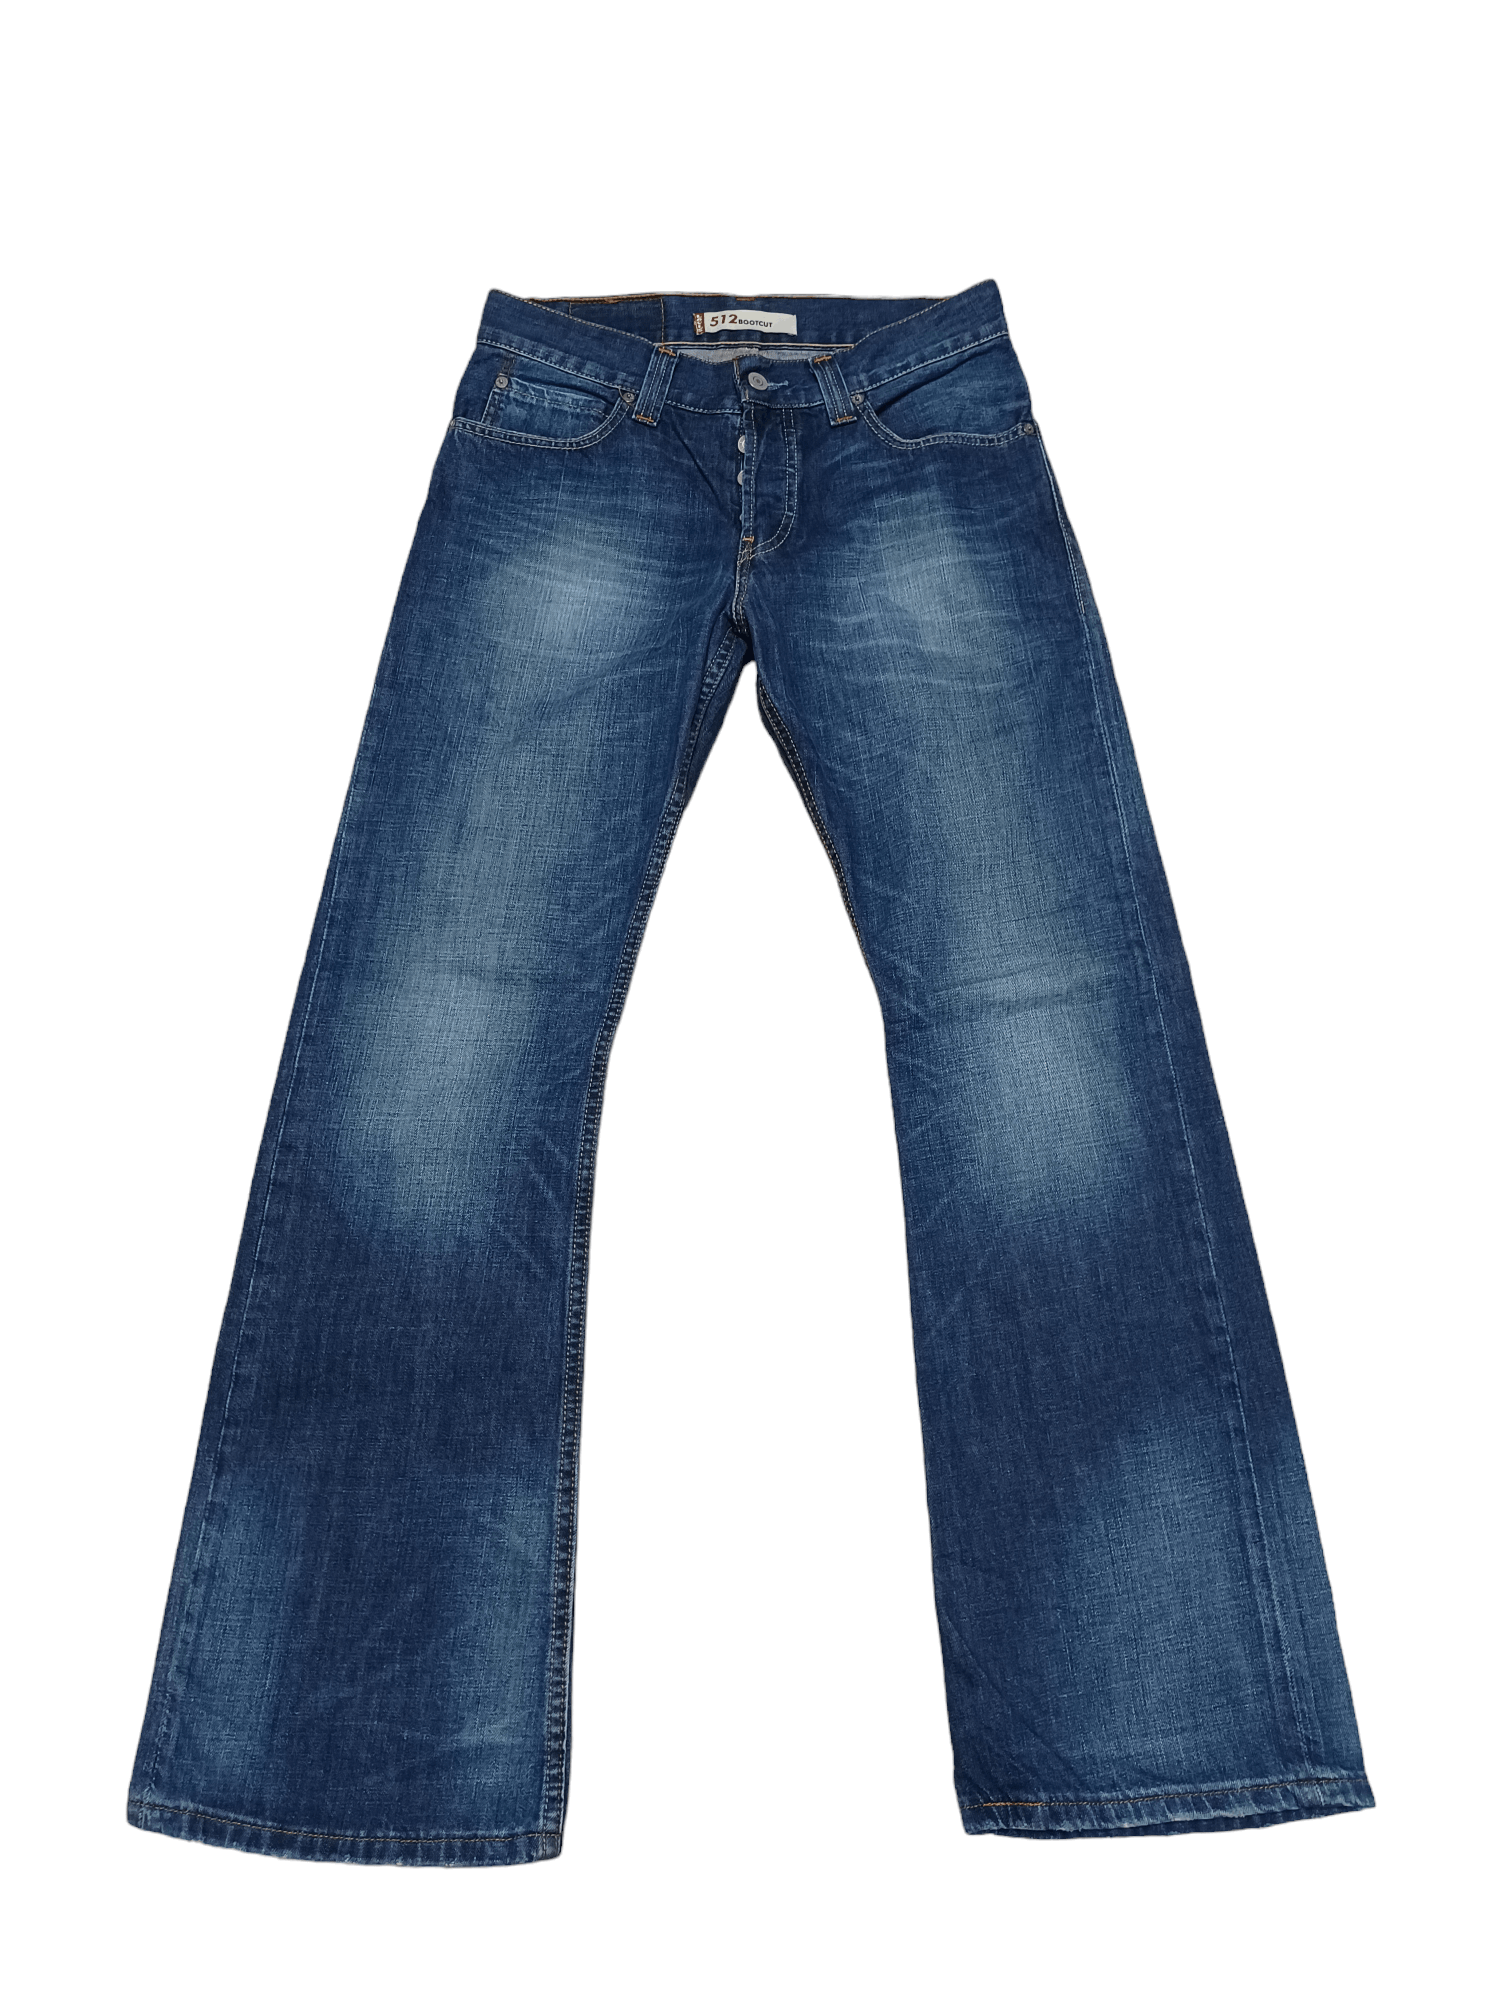 Pre-owned Avant Garde X Levis Vintage Clothing Vintage Levis 512 Bootcut Avantgarde Jeans Denim W30 L32 In Blue